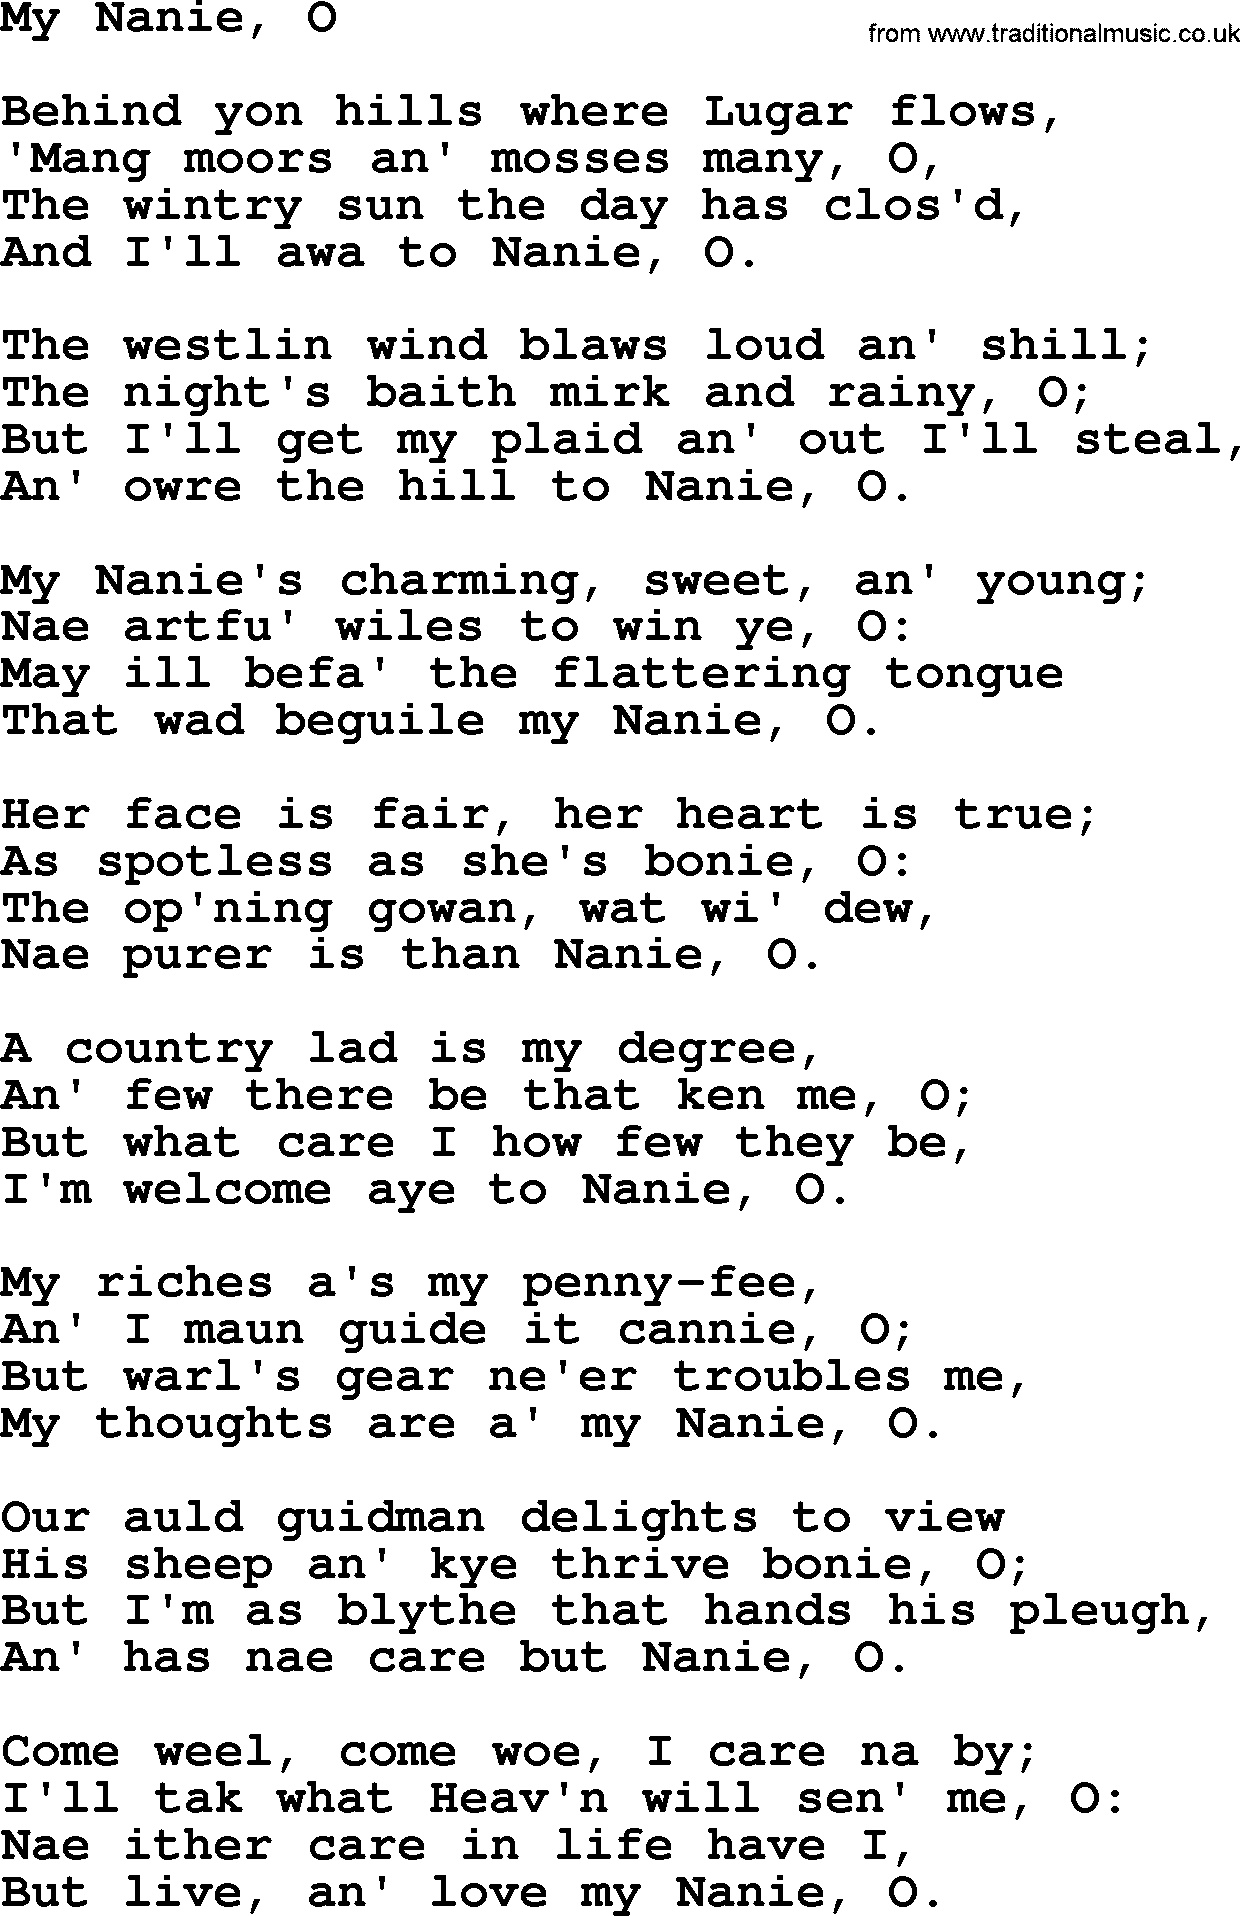 Robert Burns Songs & Lyrics: My Nanie, O